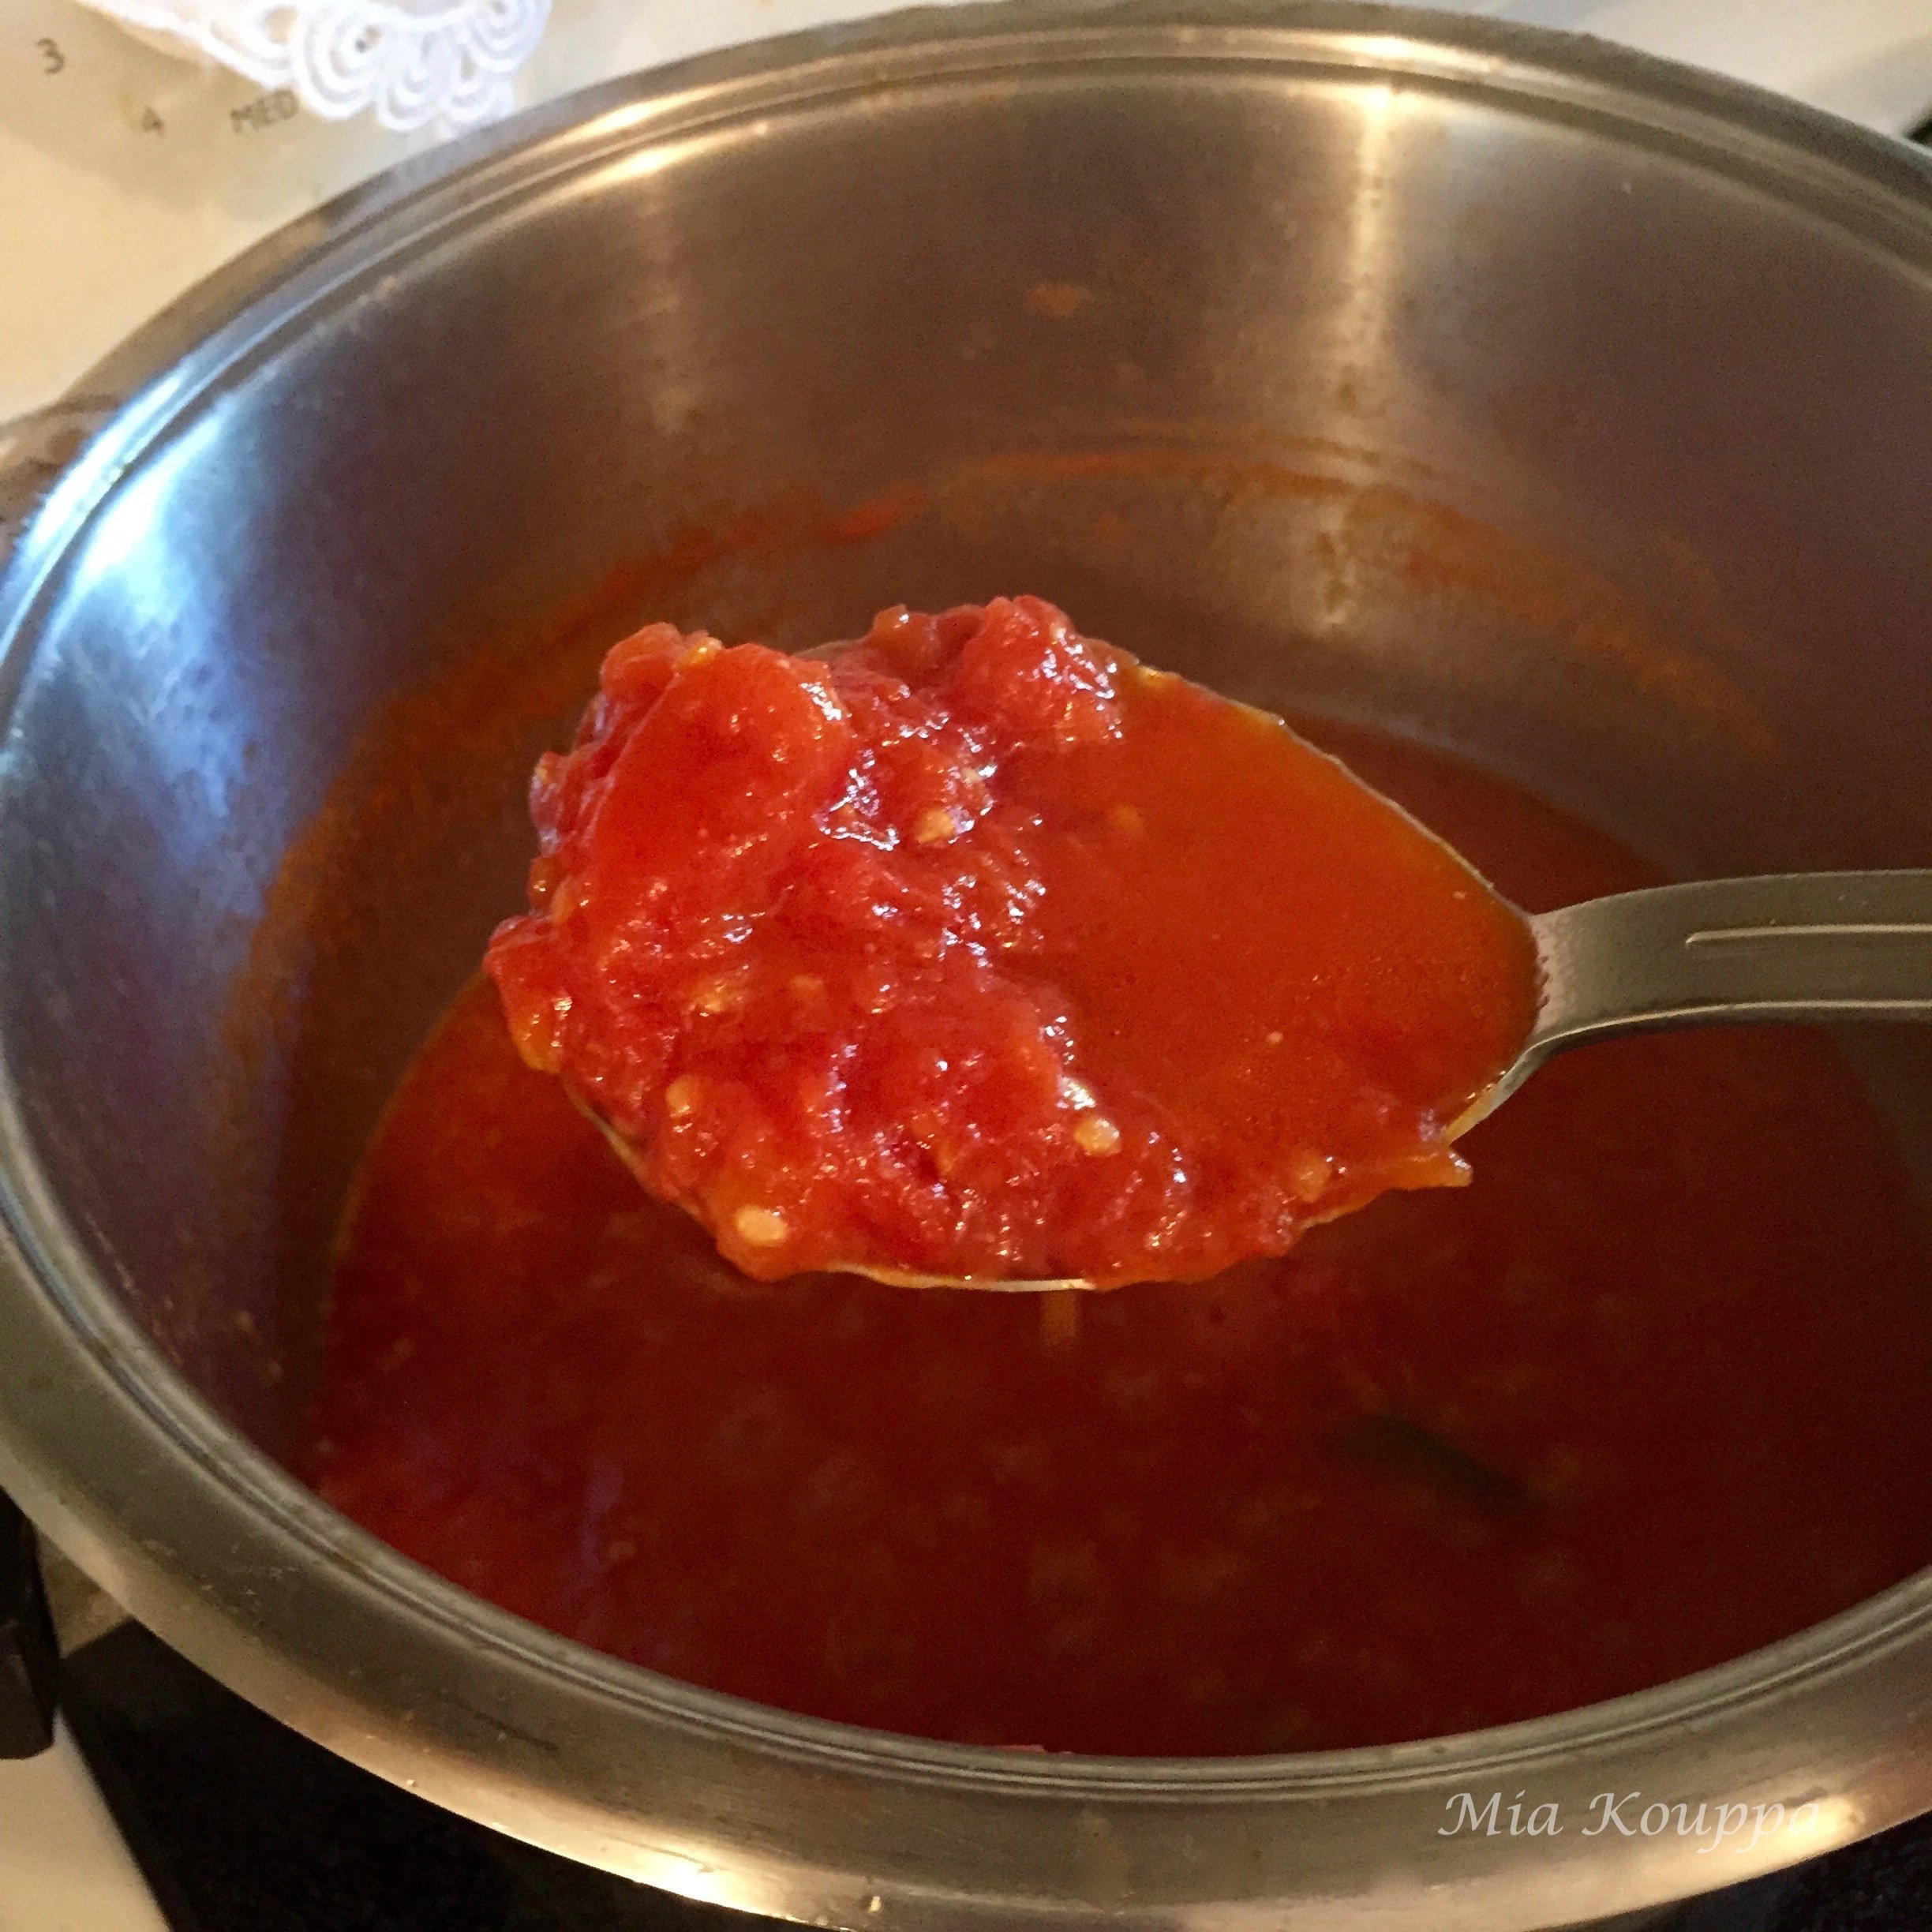 Chunky tomato sauce